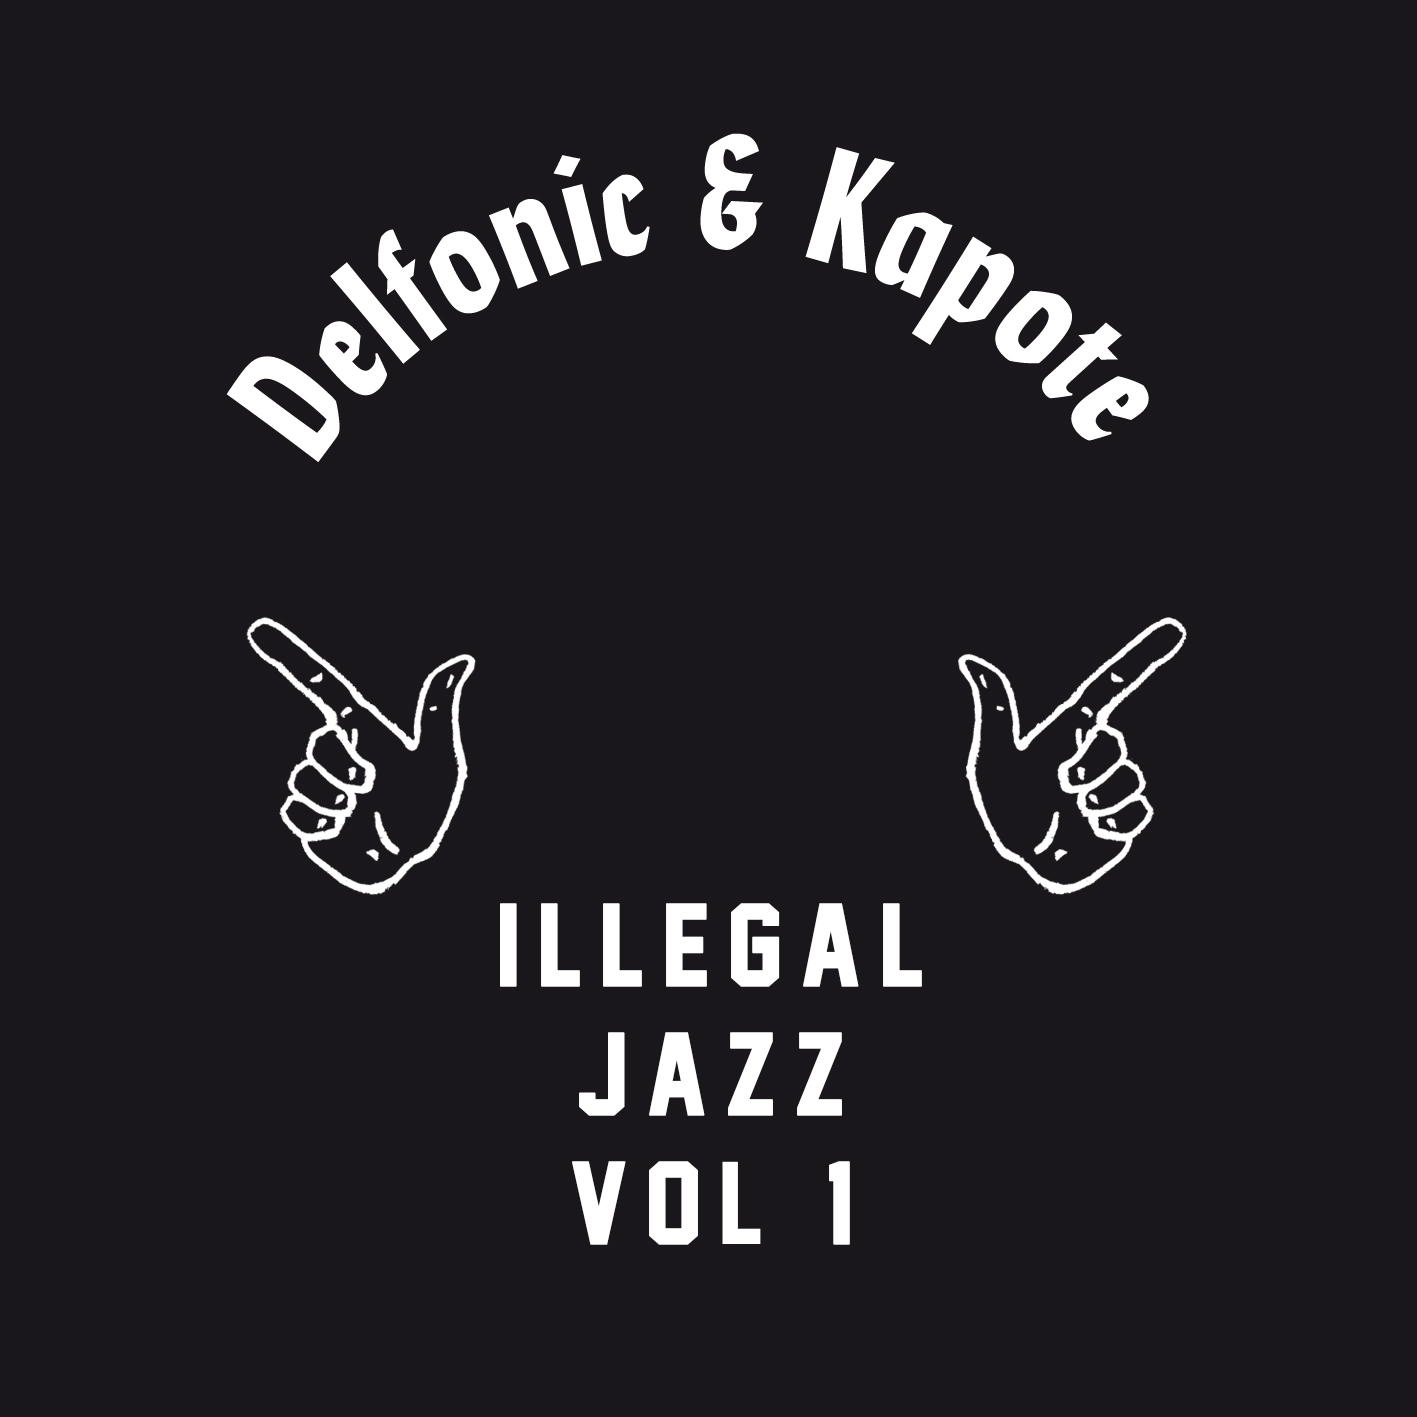 Delfonic & Kapote – Illegal Jazz Vol. 1  [IJR001]